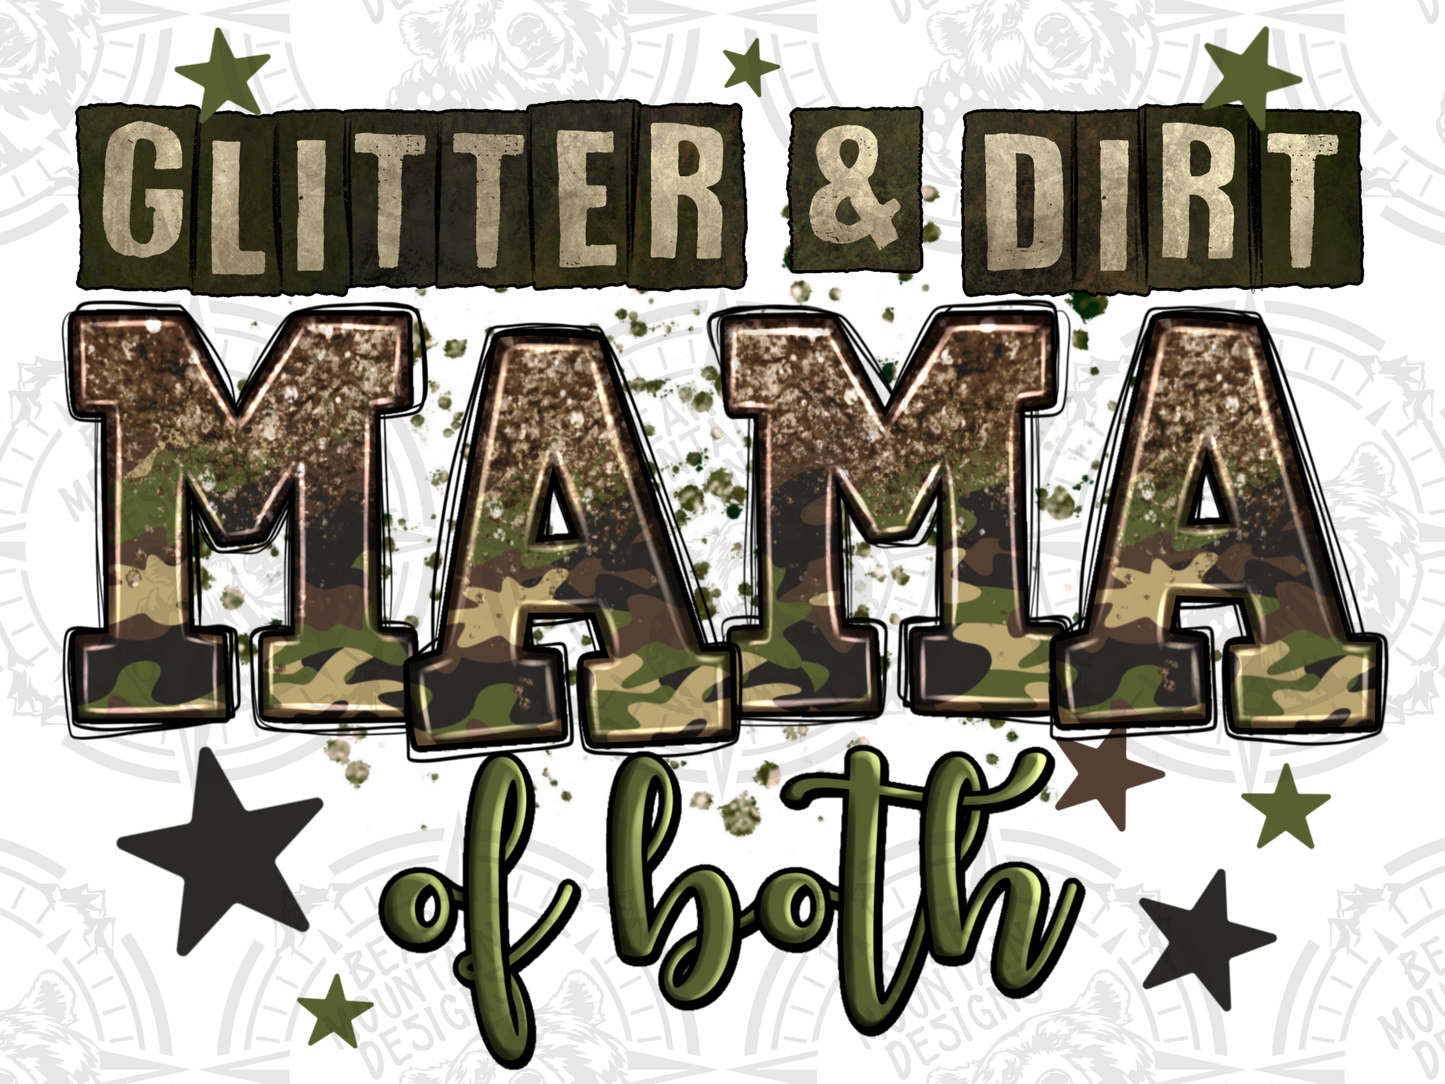 Glitter & Dirt Mama Of Both - Green